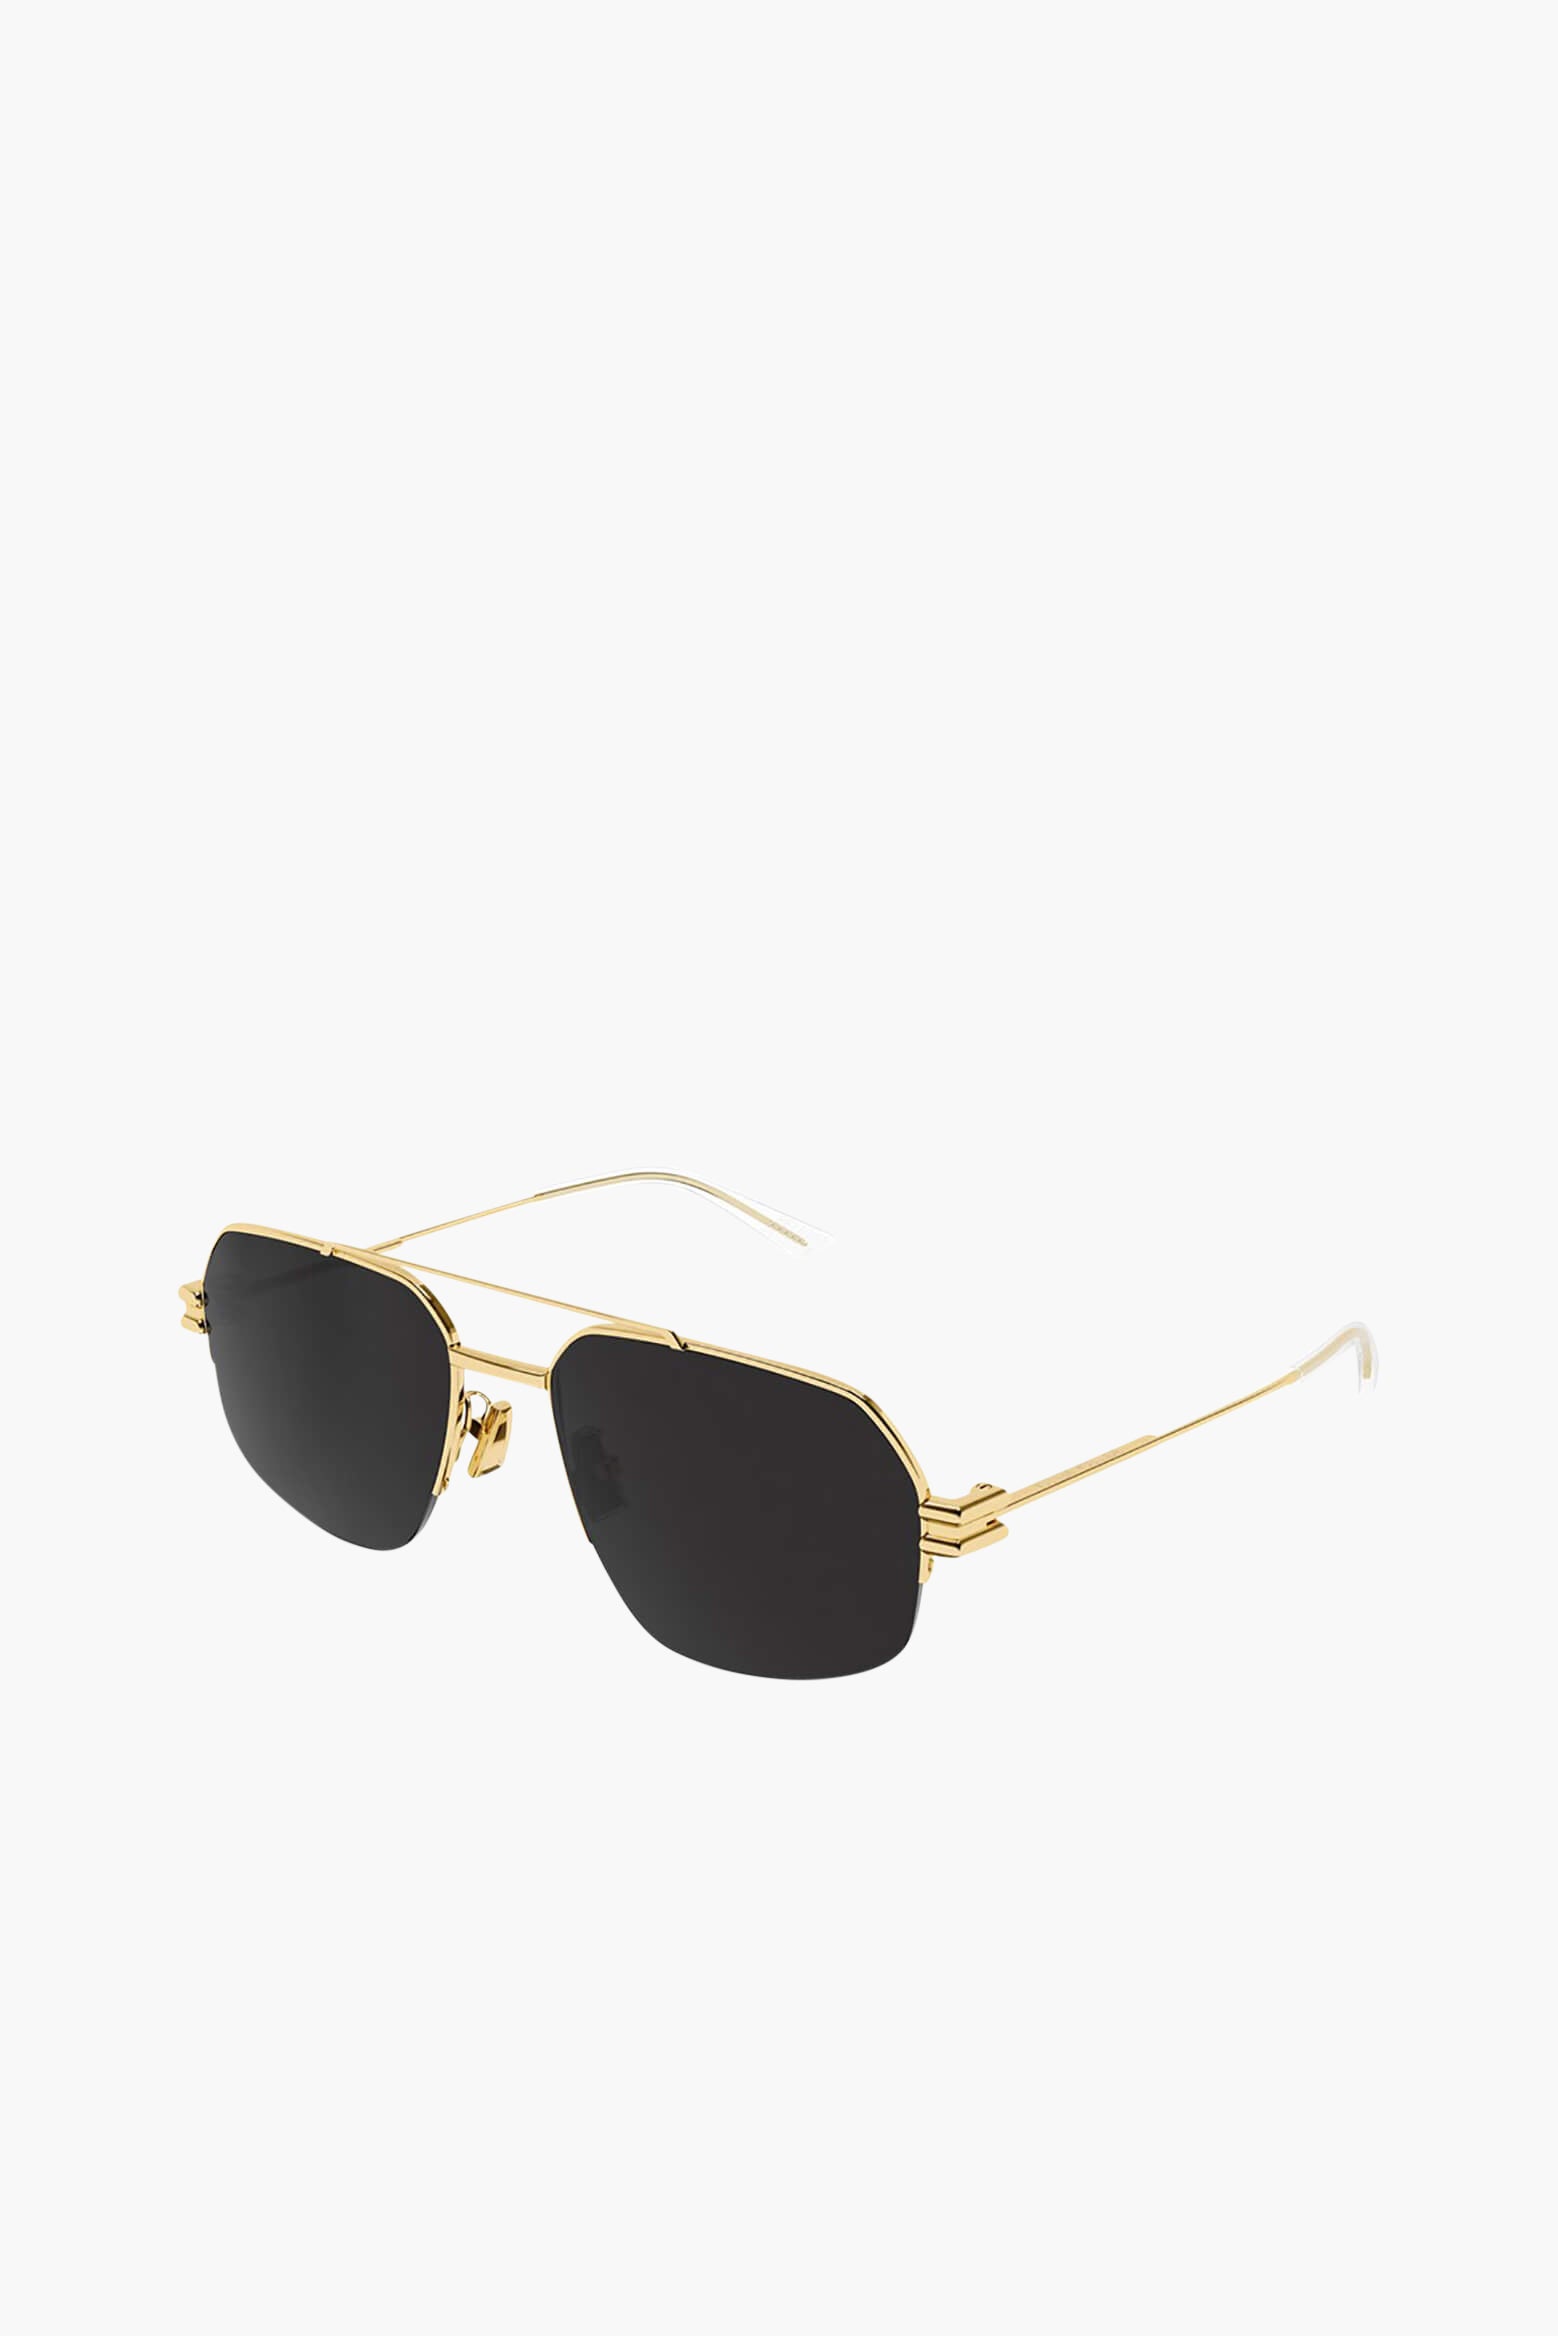 Bottega Veneta Aviator Sunglasses in Gold from The New Trend